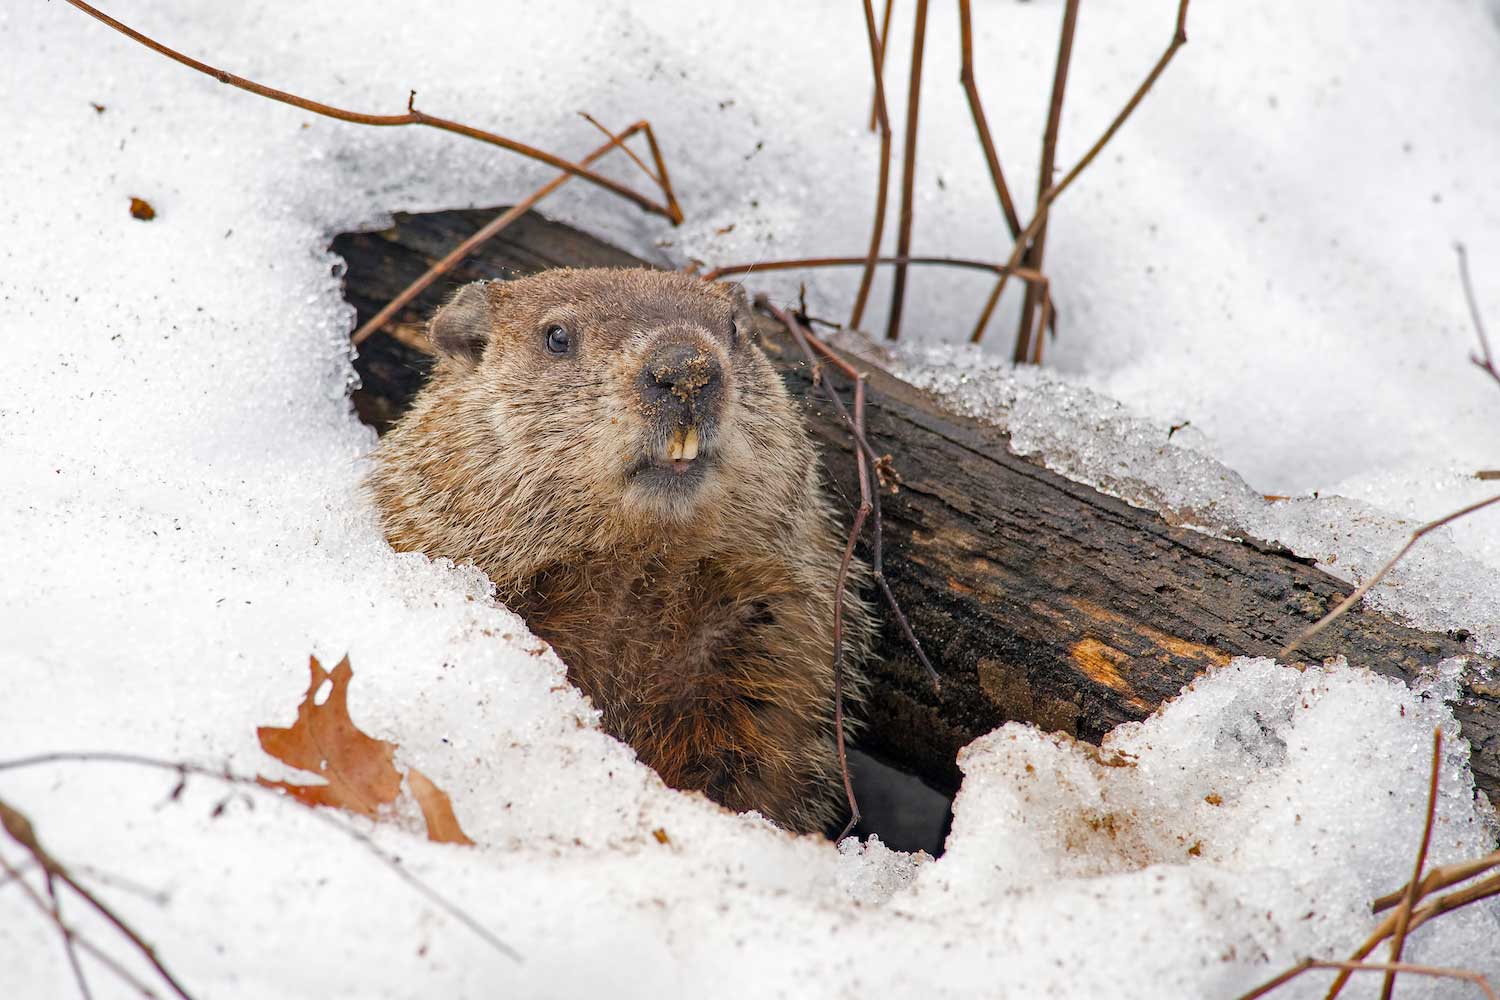 Virtual Field Trip - Groundhogs Day - digital version